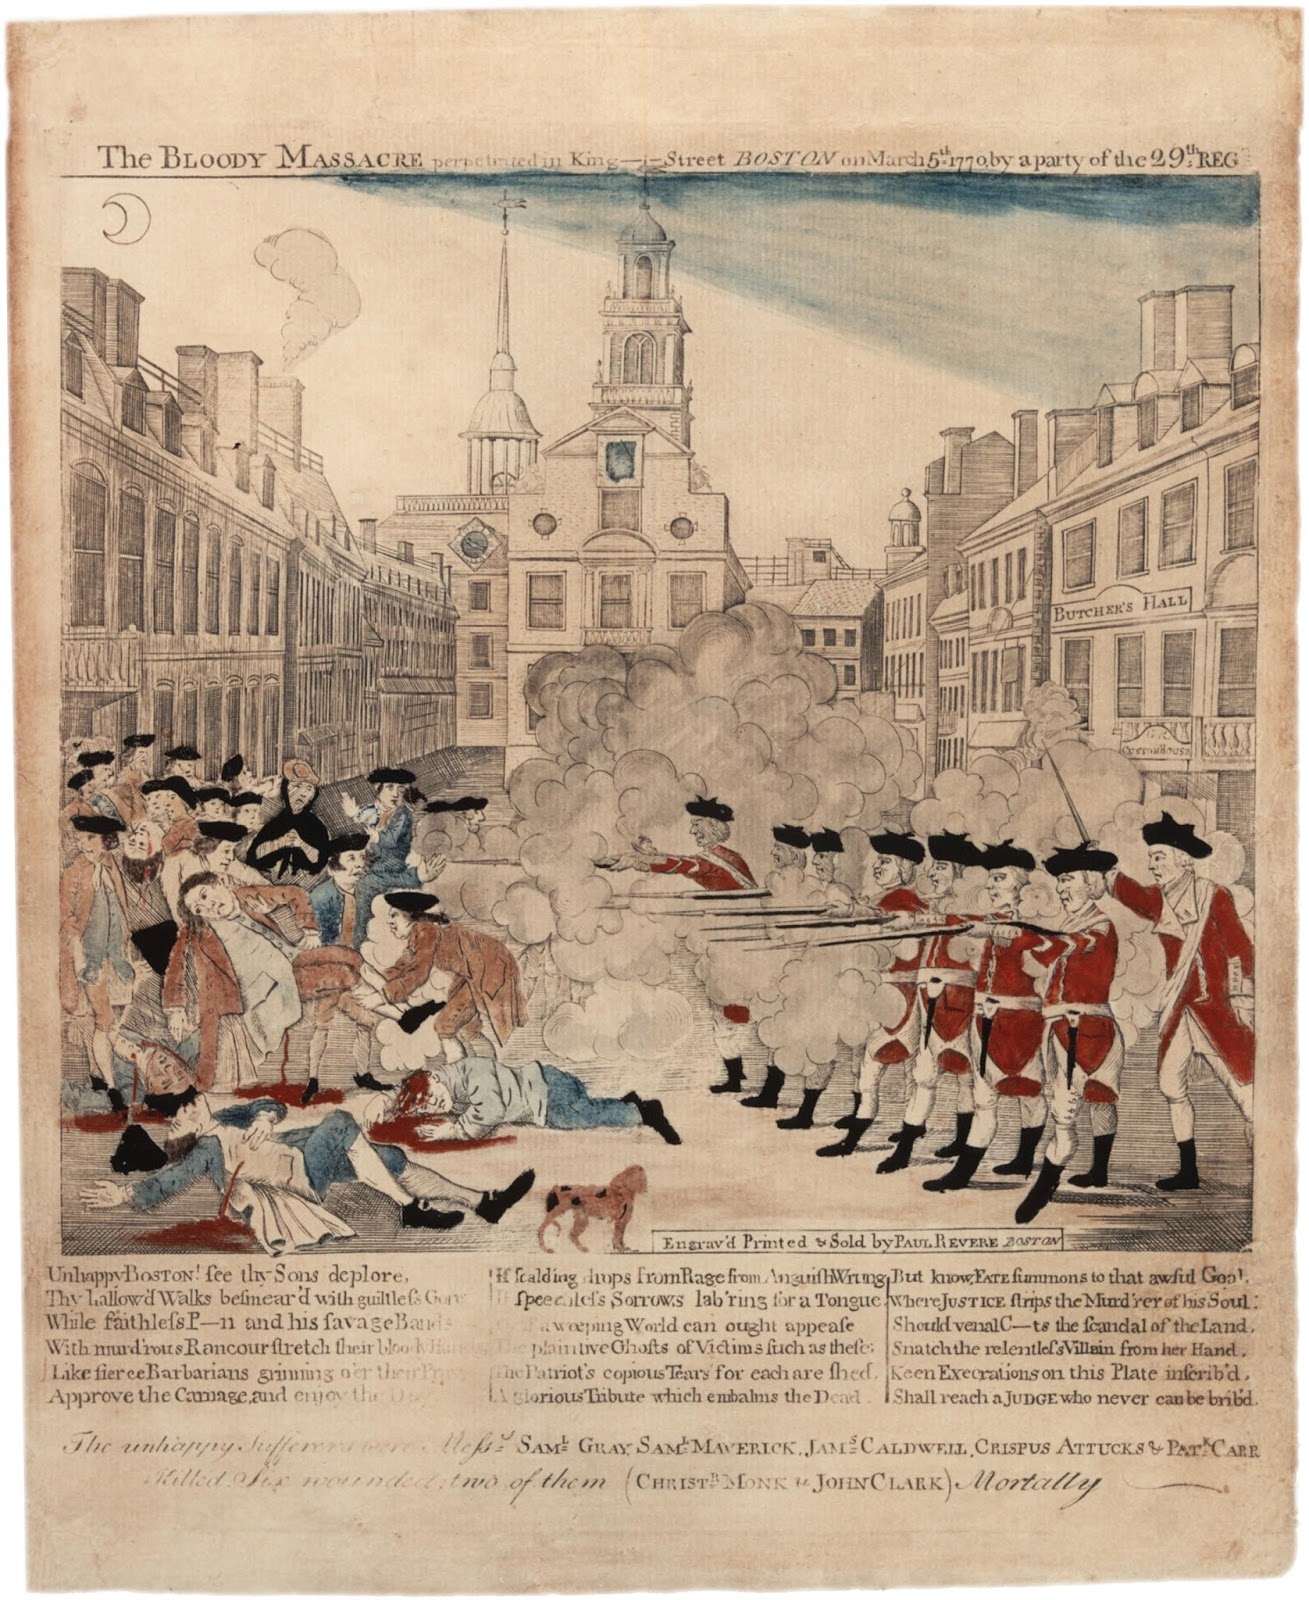 Boston Massacre A Turning Point Essay